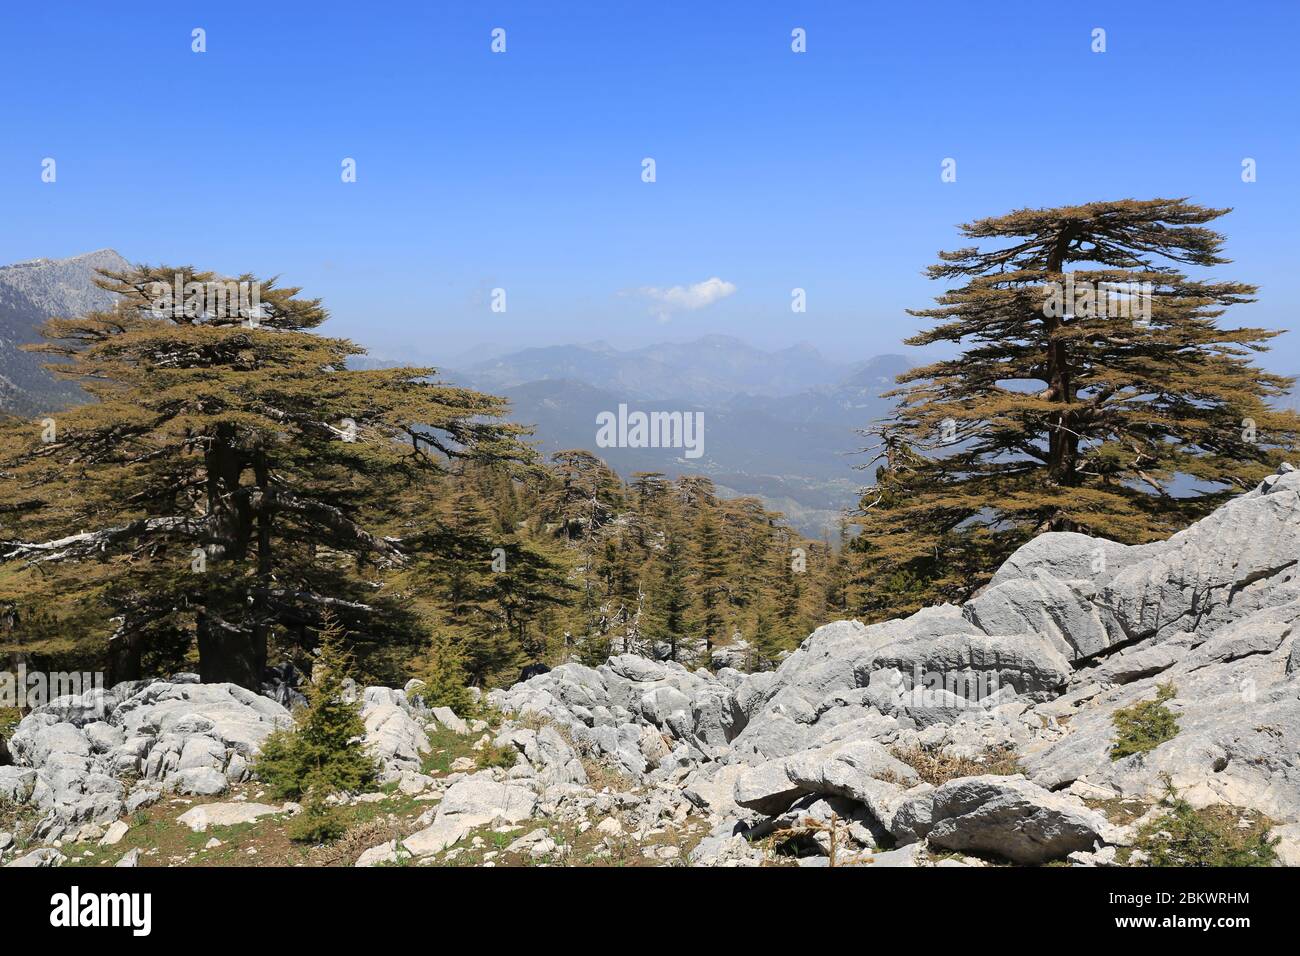 Cedar forest on mountains slope in Turkey. Landscape from famous Likya Yolu tourist way in Turkey. Stock Photo